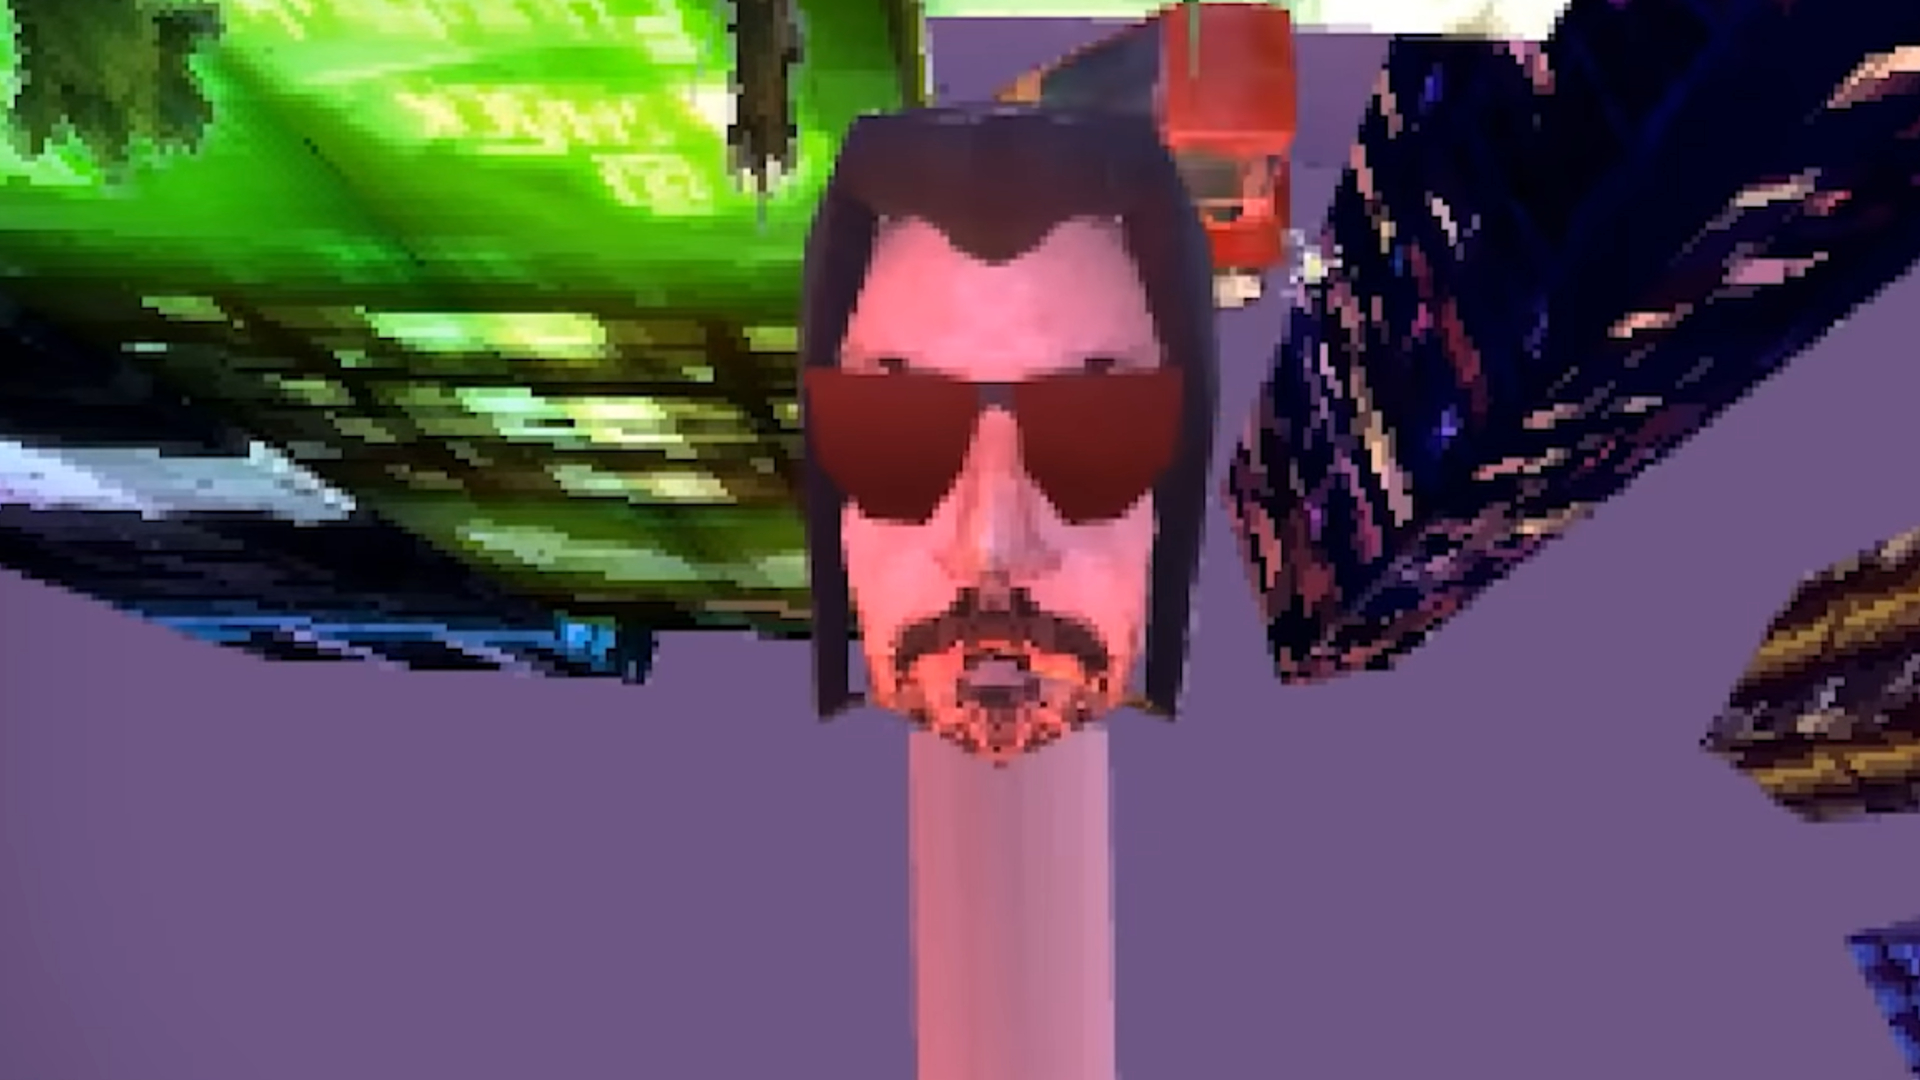  This PS1 demake of Cyberpunk 2077 turns Keanu Reeves into a satanic giraffe 